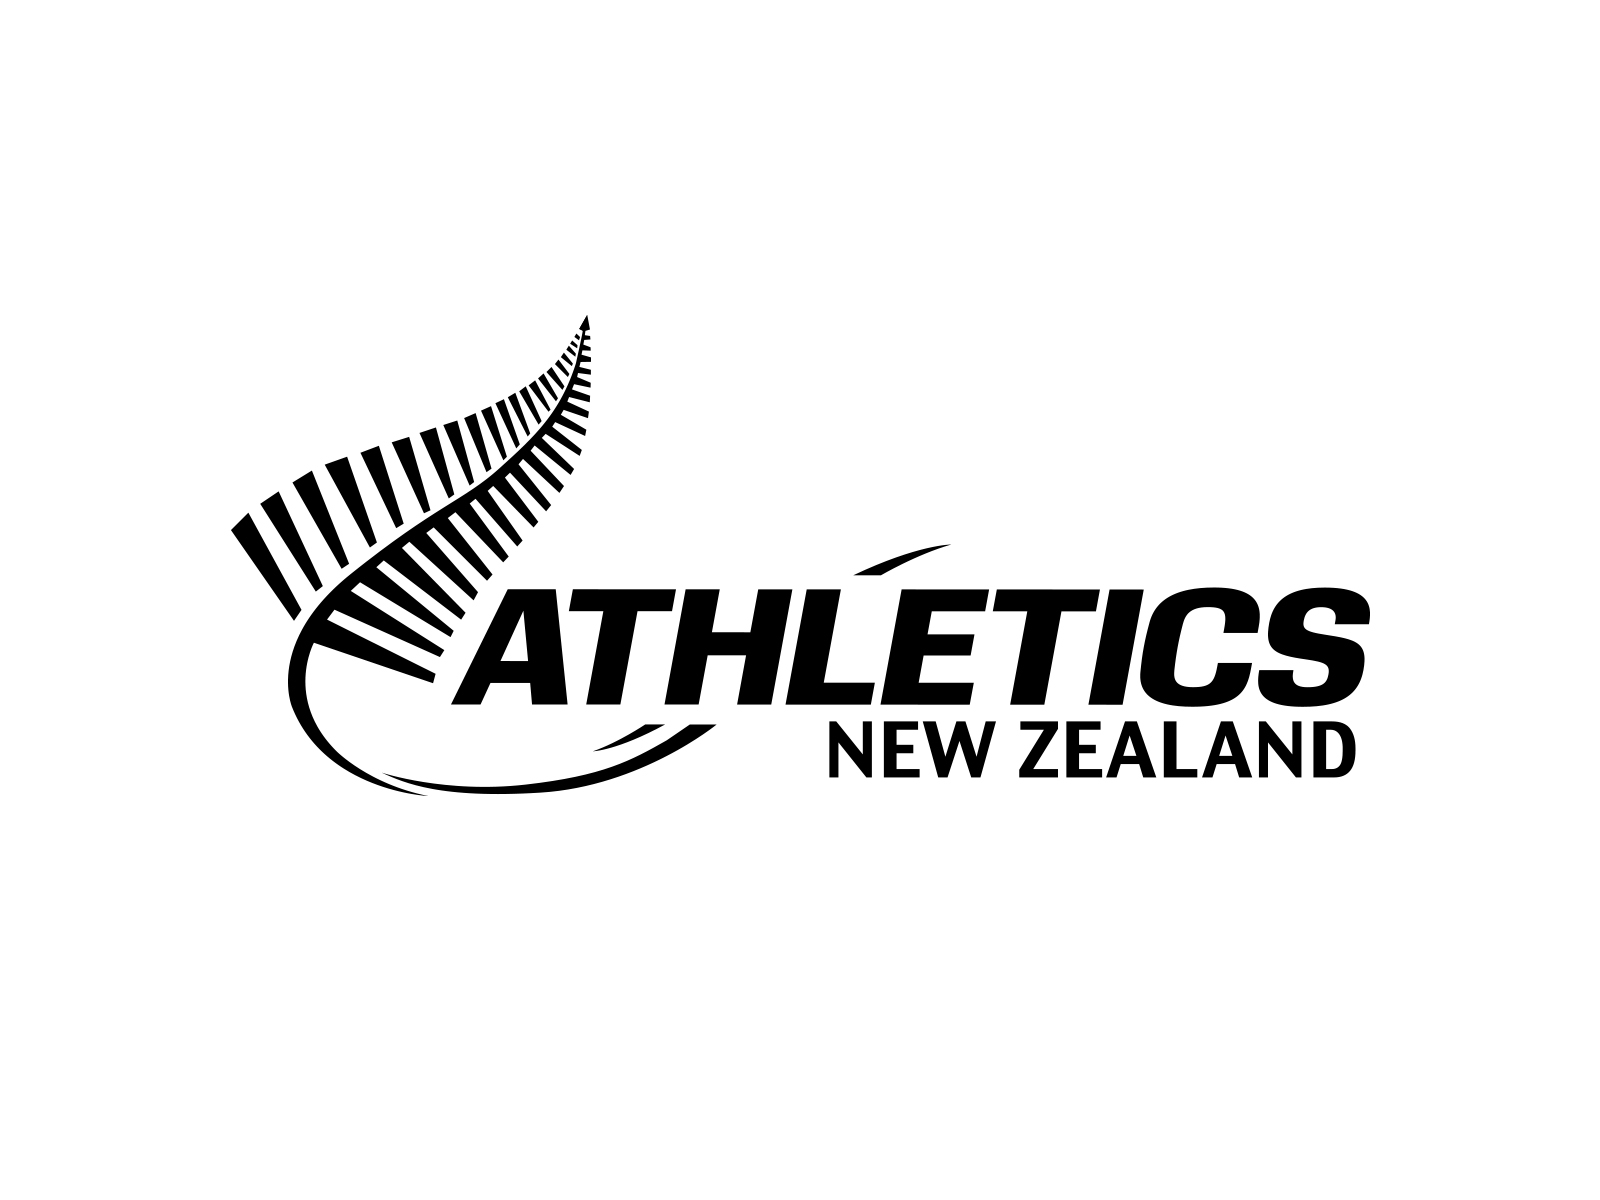 Athletics New Zealand